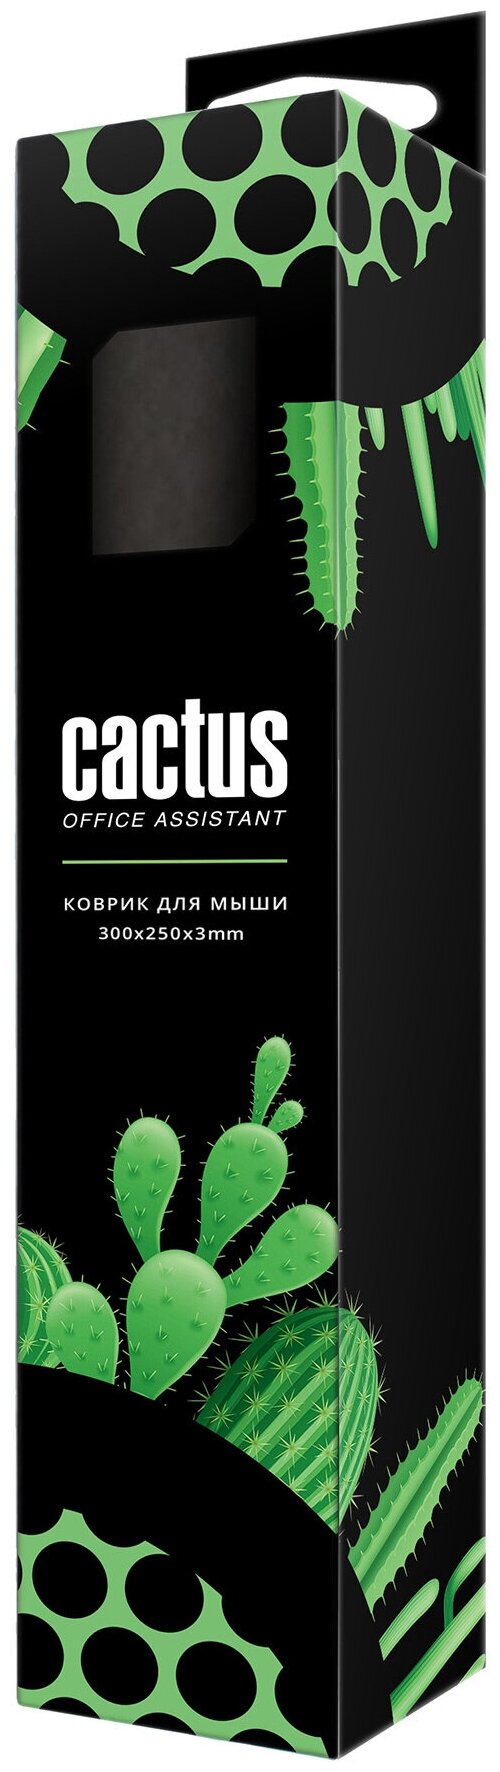 Коврик для мыши Cactus Black Mesh CS-MP-D02M 300x250x3